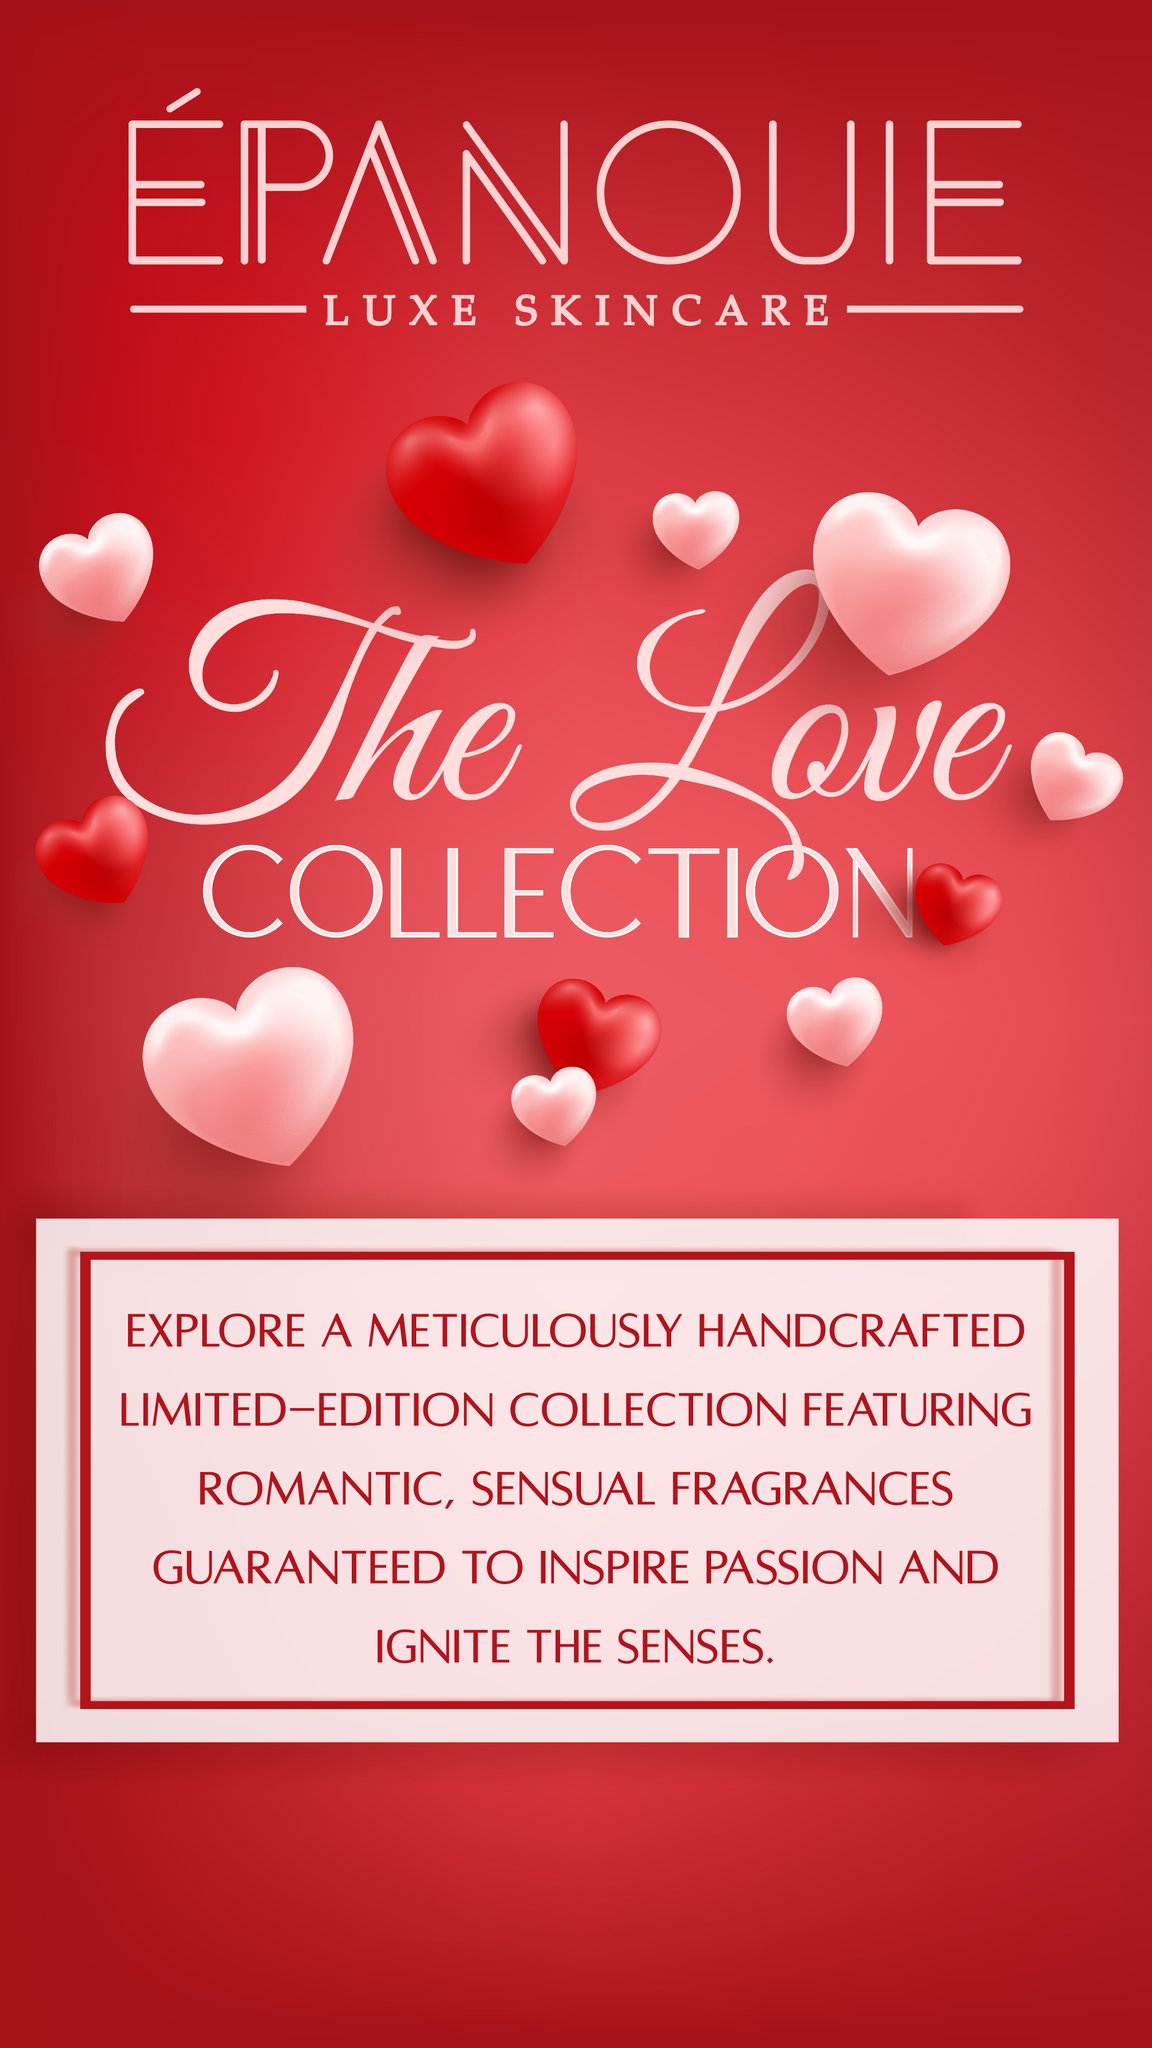 Explore The Romance Collection